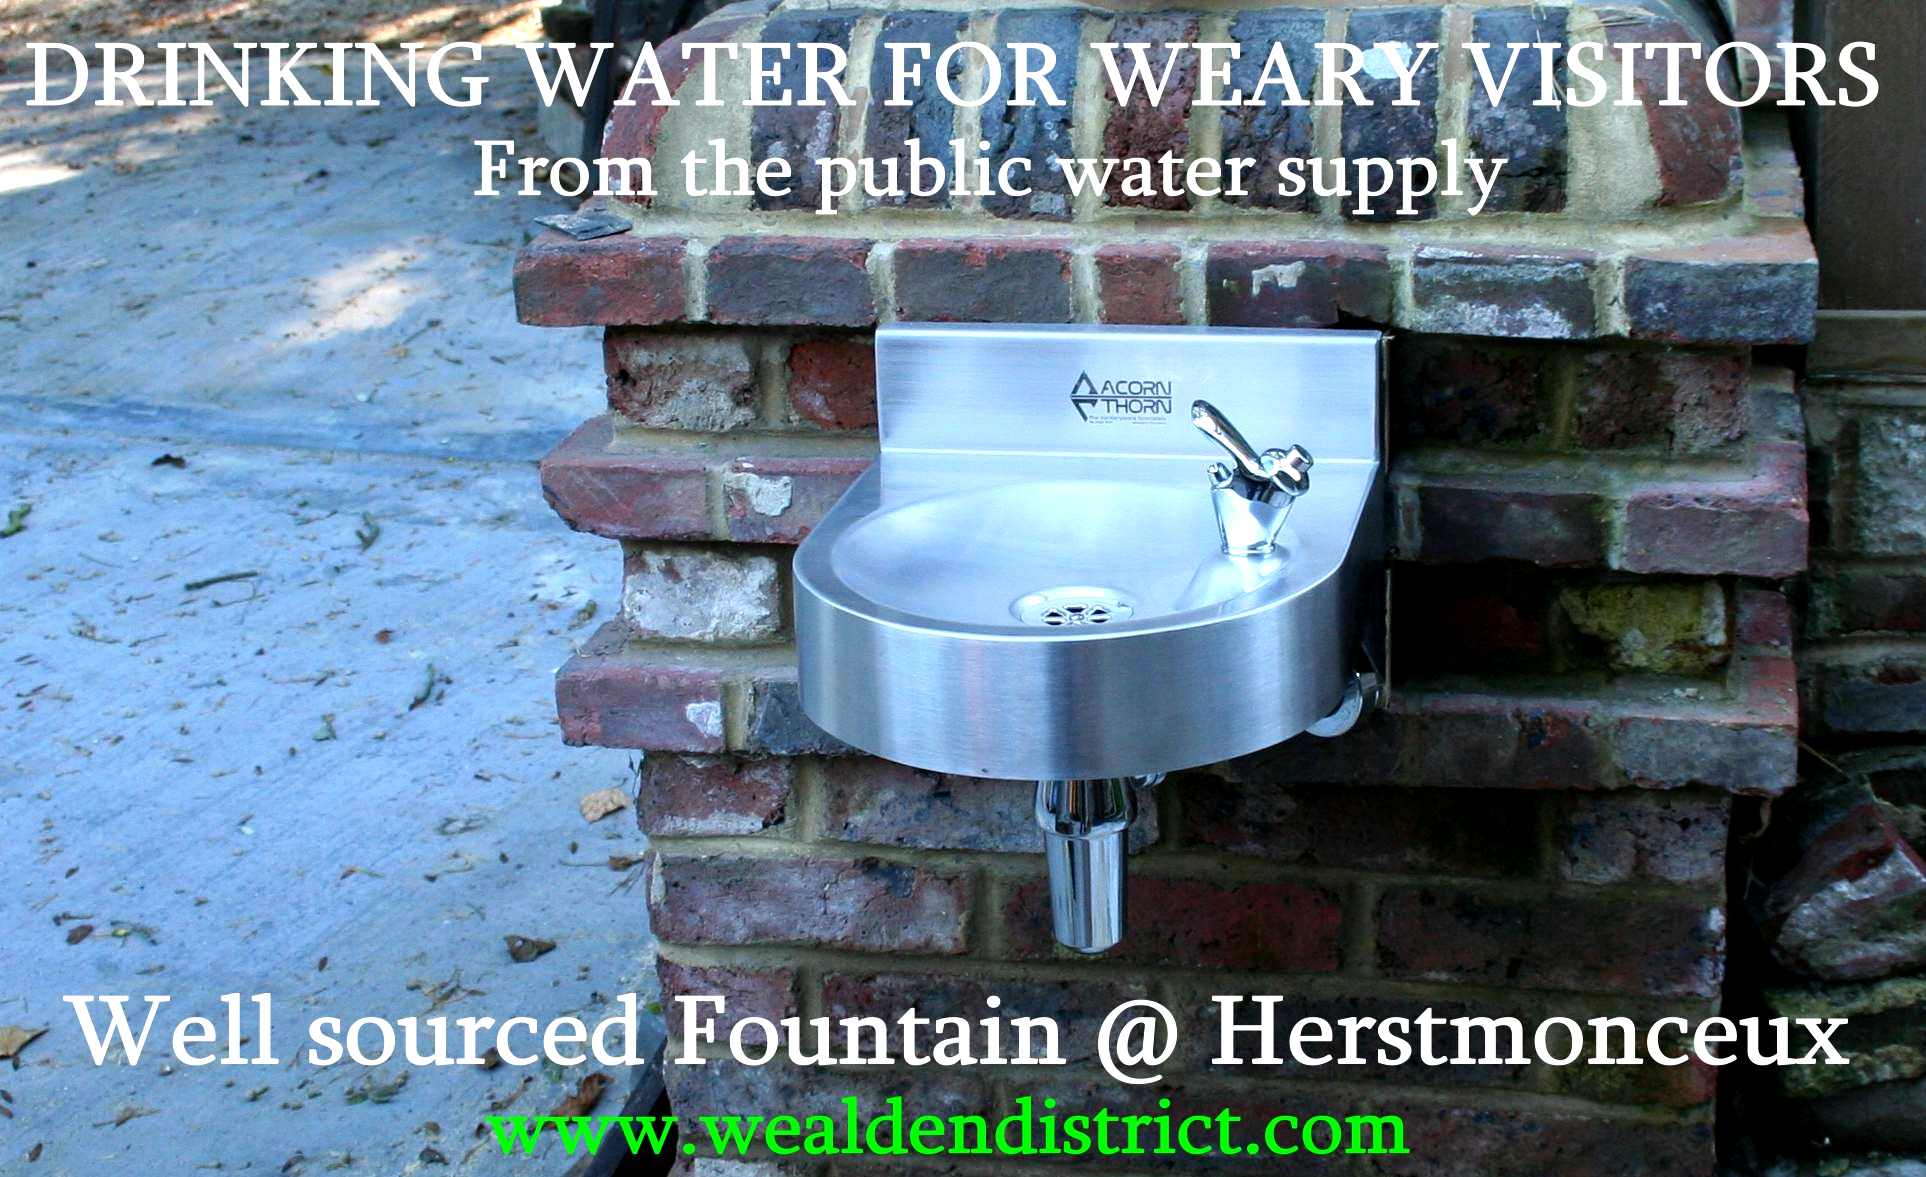 Public water supply @ Herstmonceux, Sussex